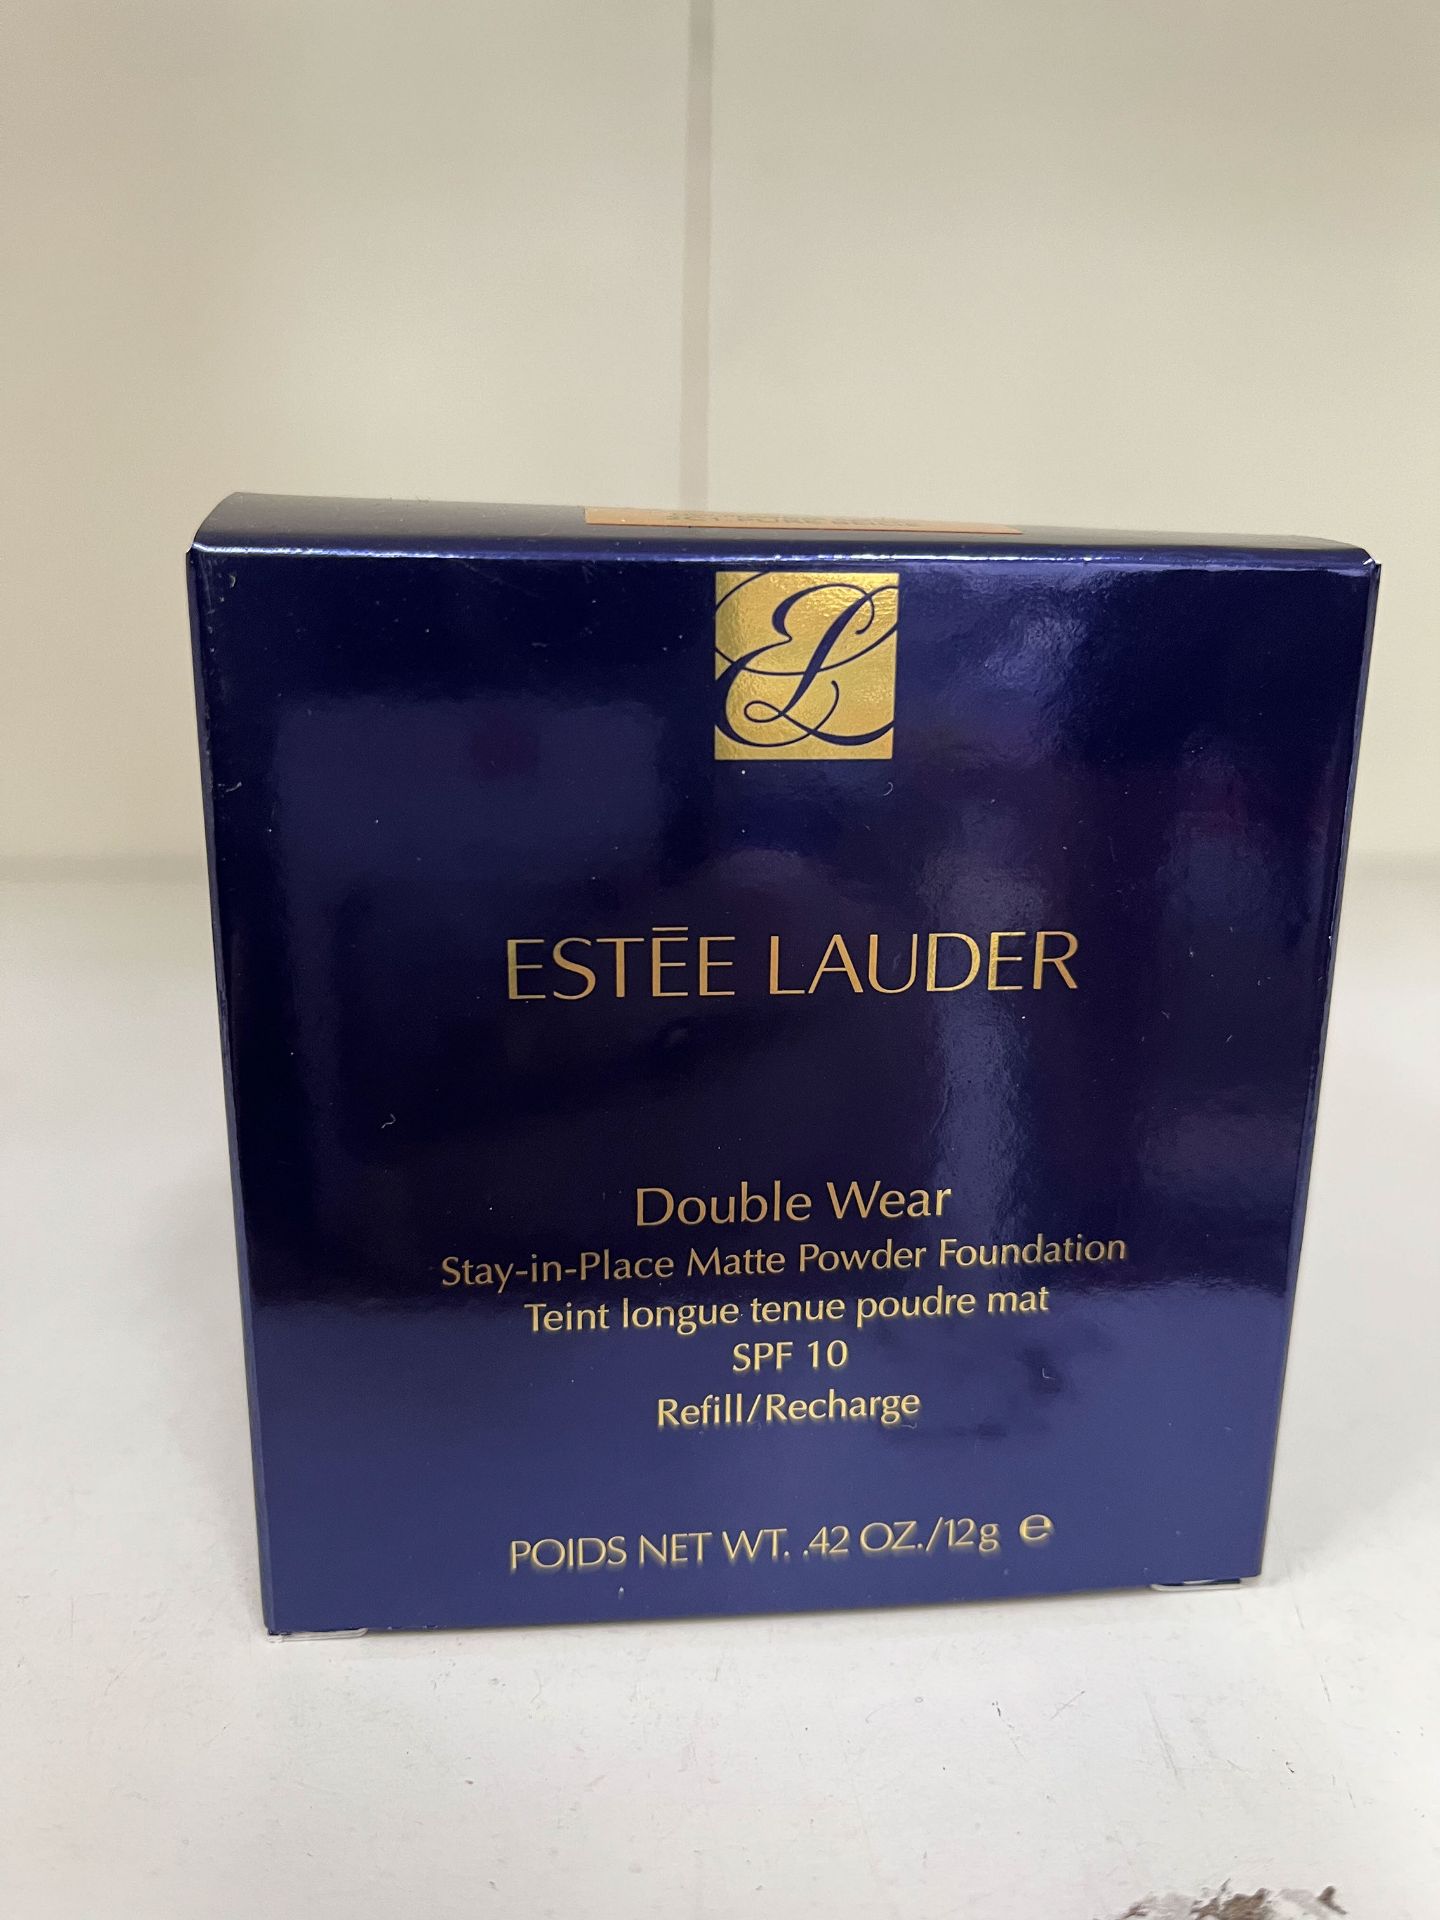 A Selection of Estée Lauder Make-Up Products